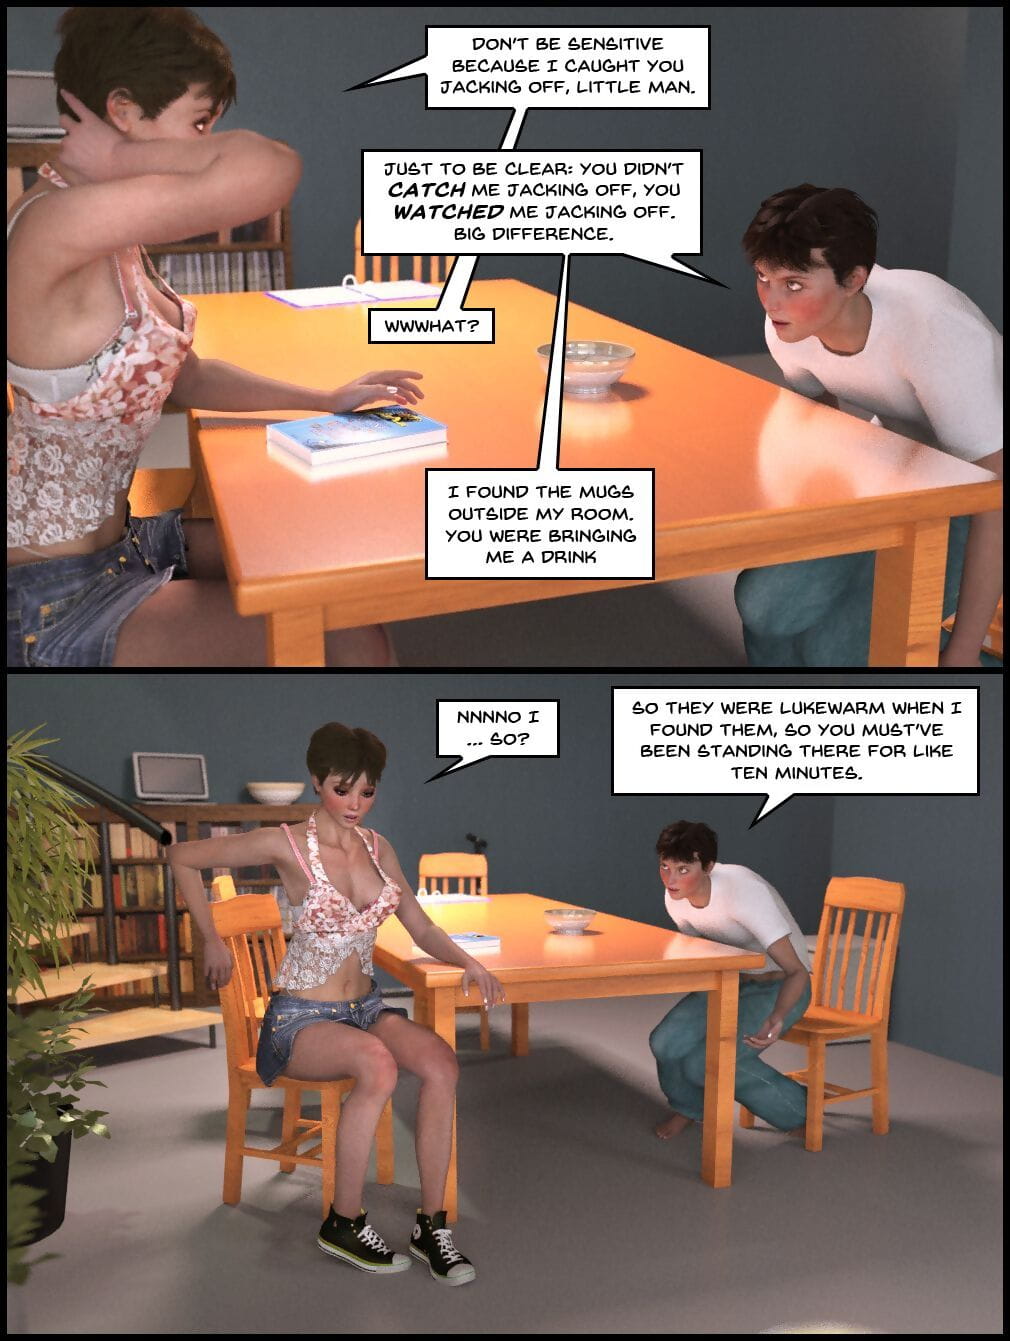 Sindy アンナ ジョーンズ ~ の リチウム comic. 02: 団体 に 軌道 page 1